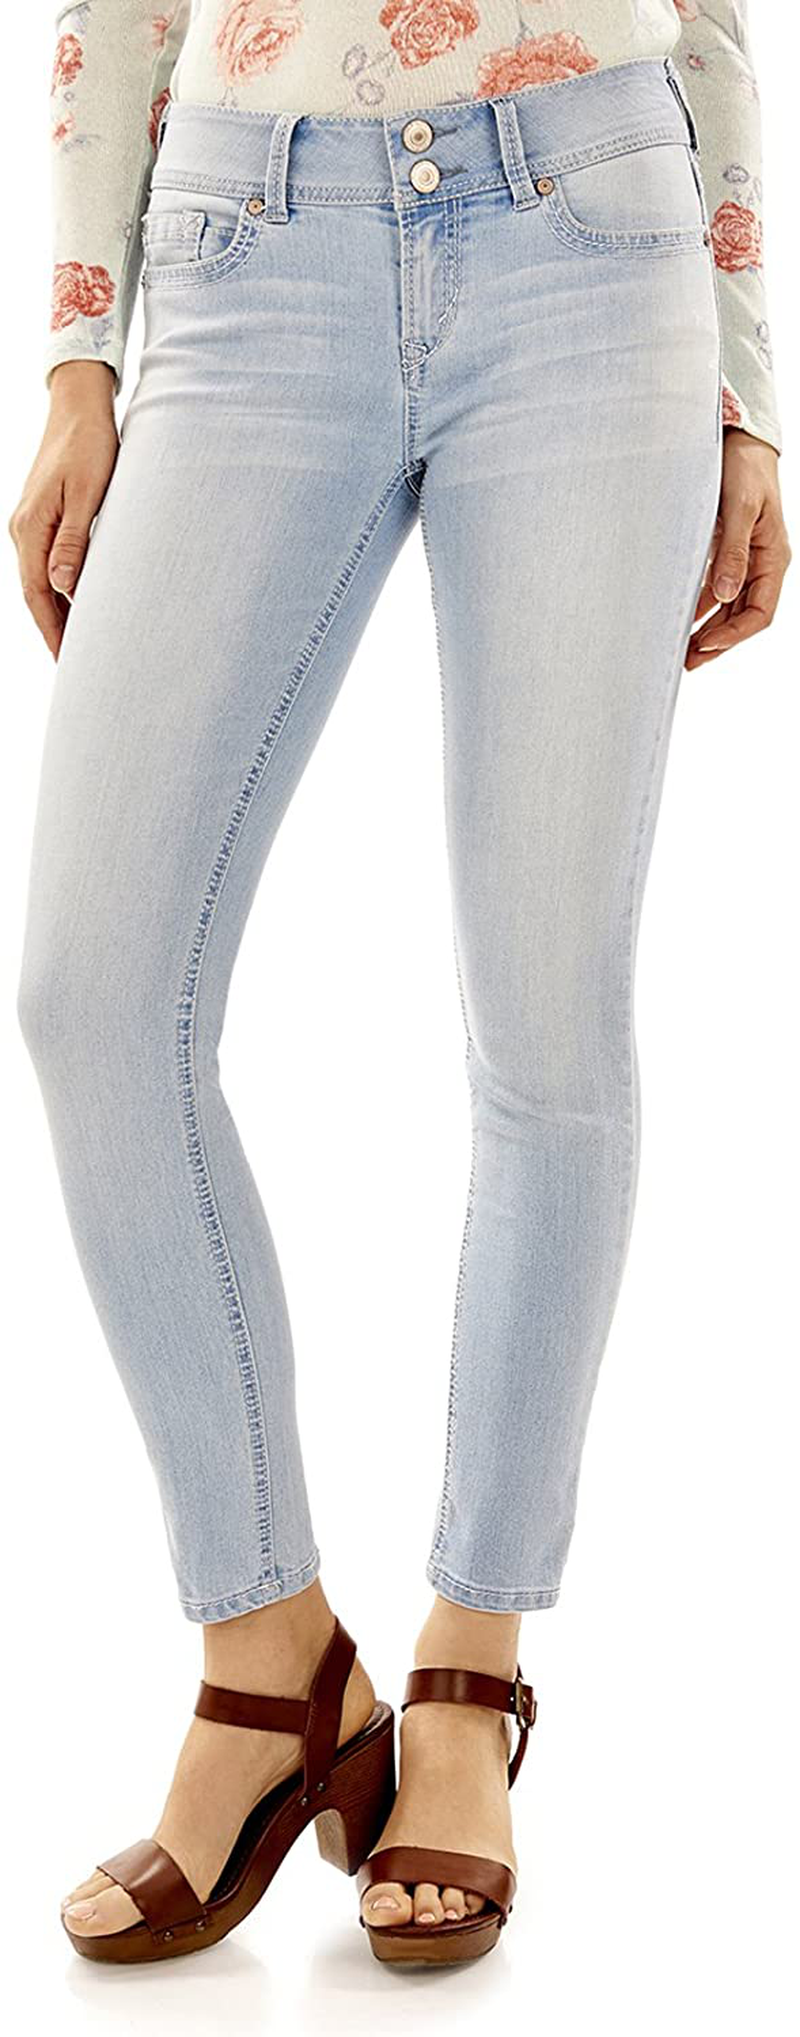 WallFlower Women's Juniors InstaStretch Luscious Curvy Skinny Jeans